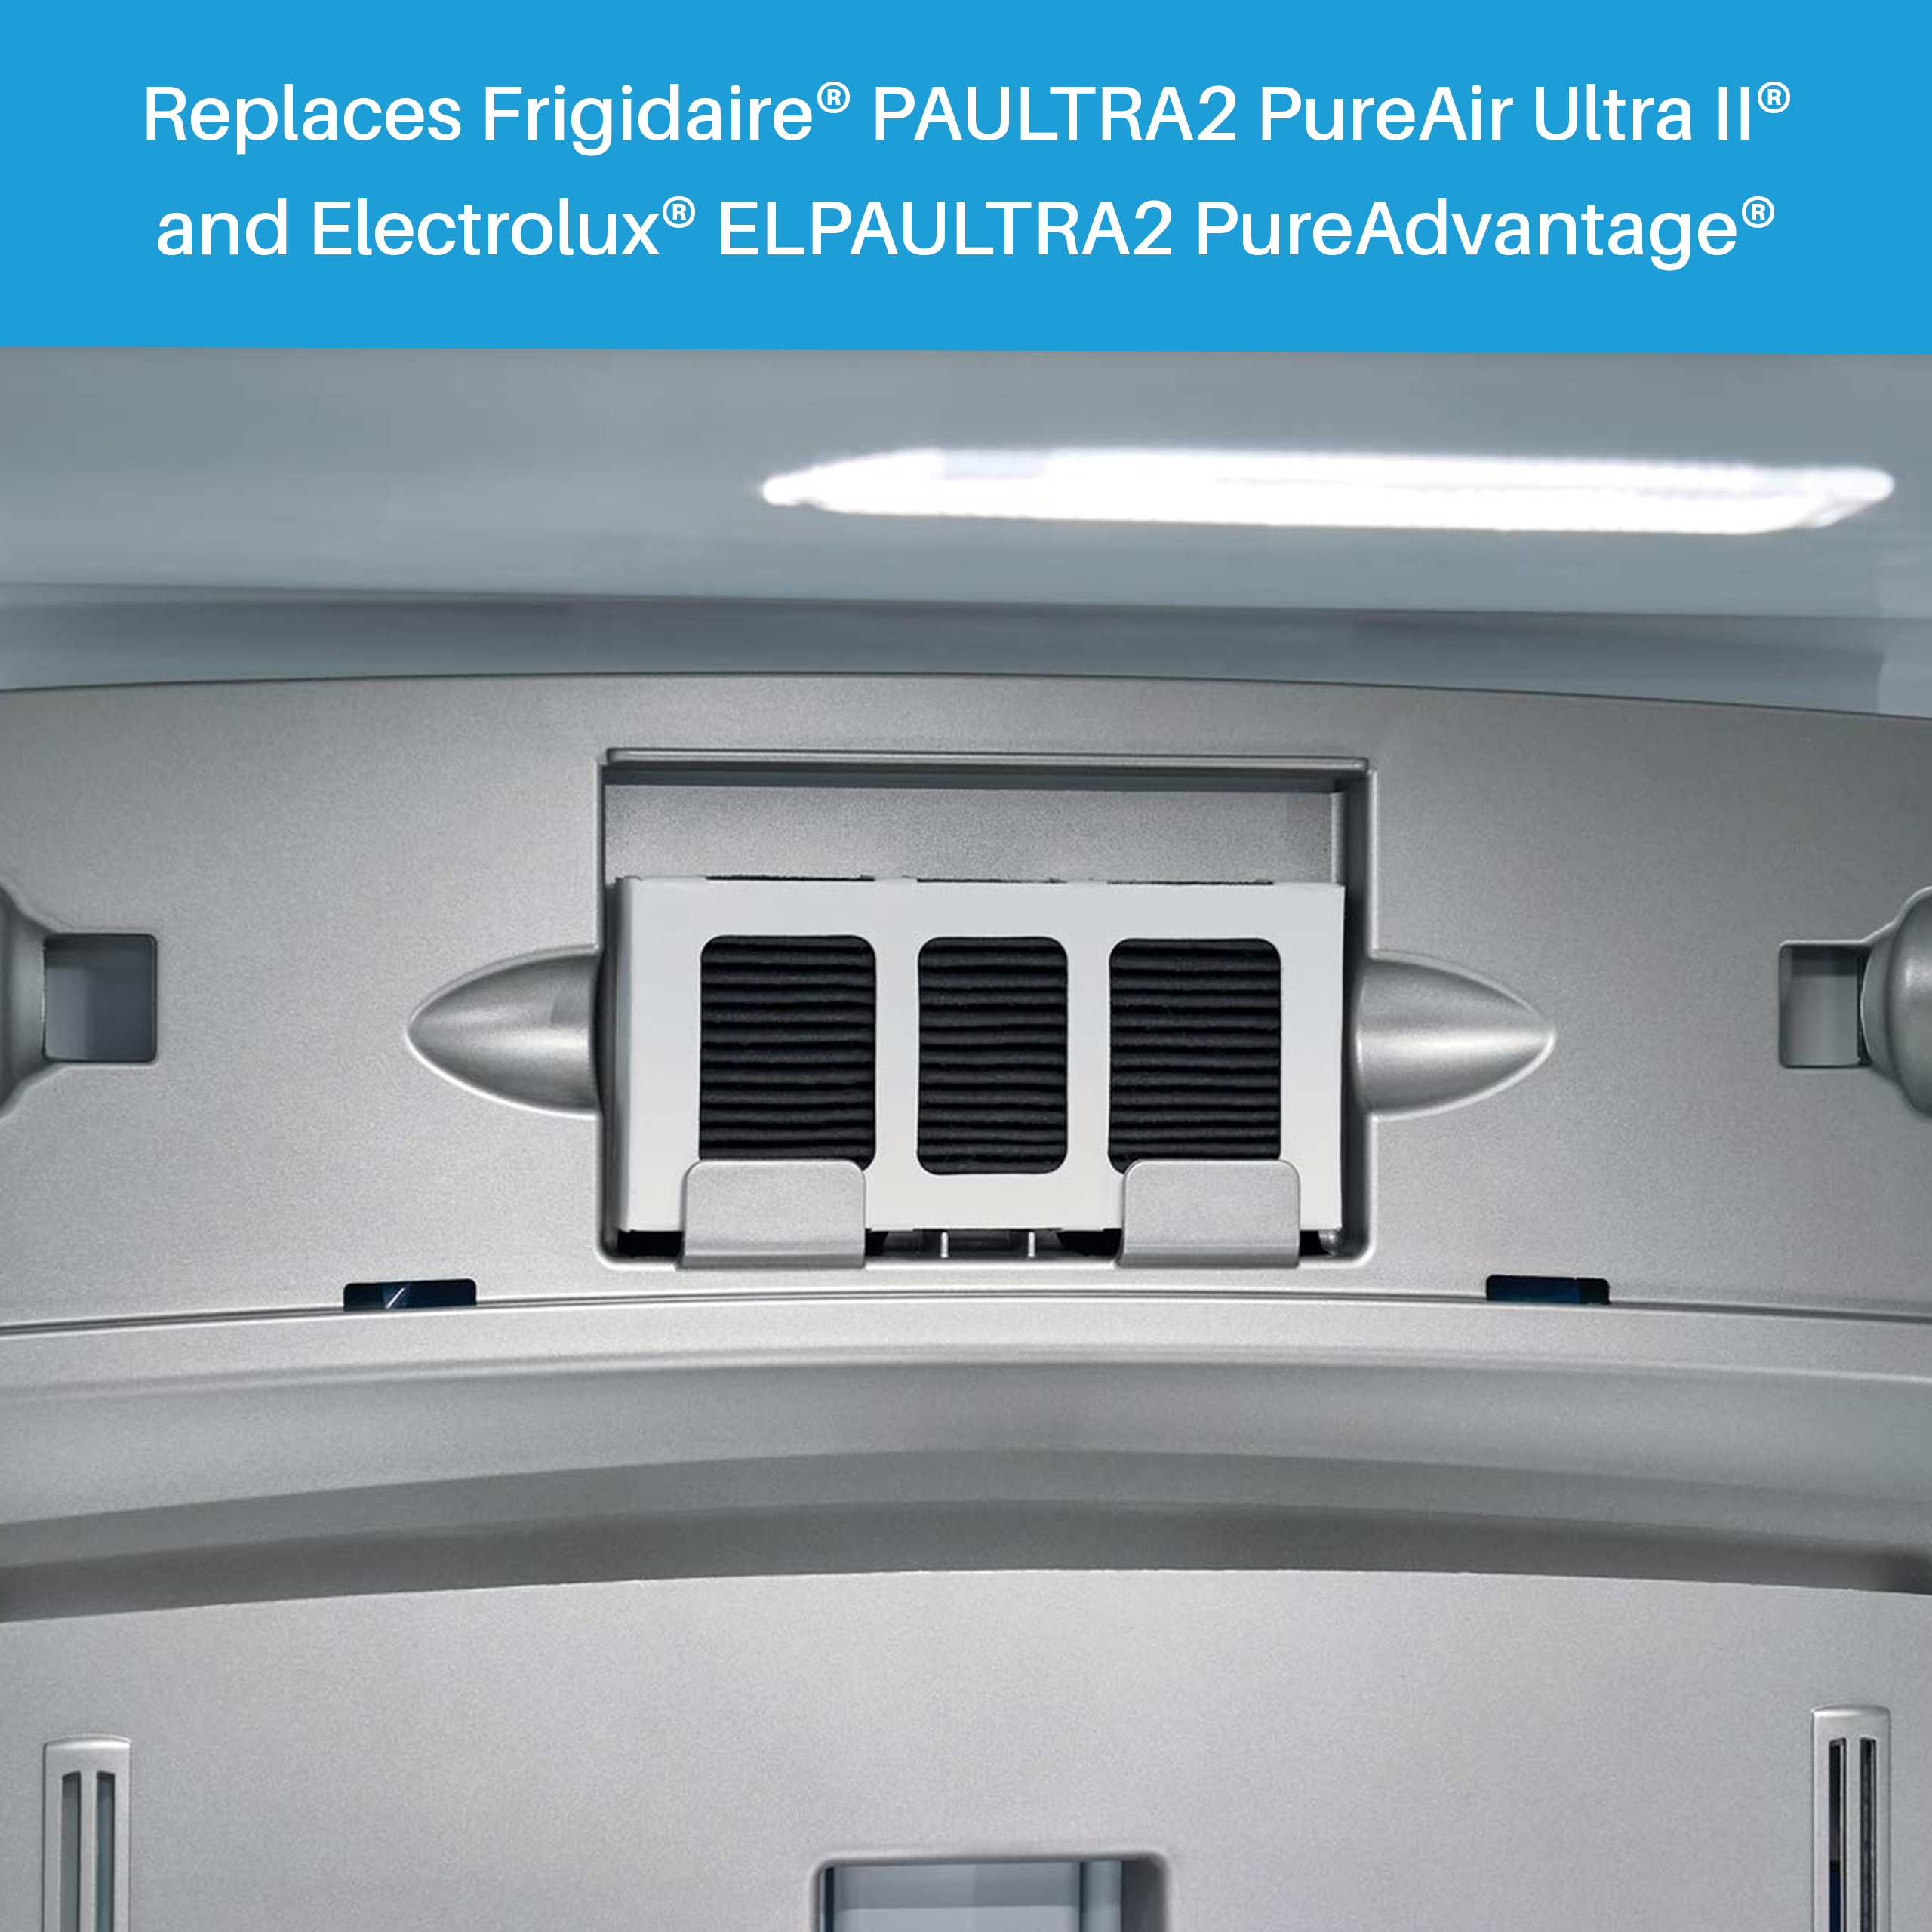 Frigidaire PRMC2285AF Air Filter (Pure Air Ultra2) - Genuine OEM